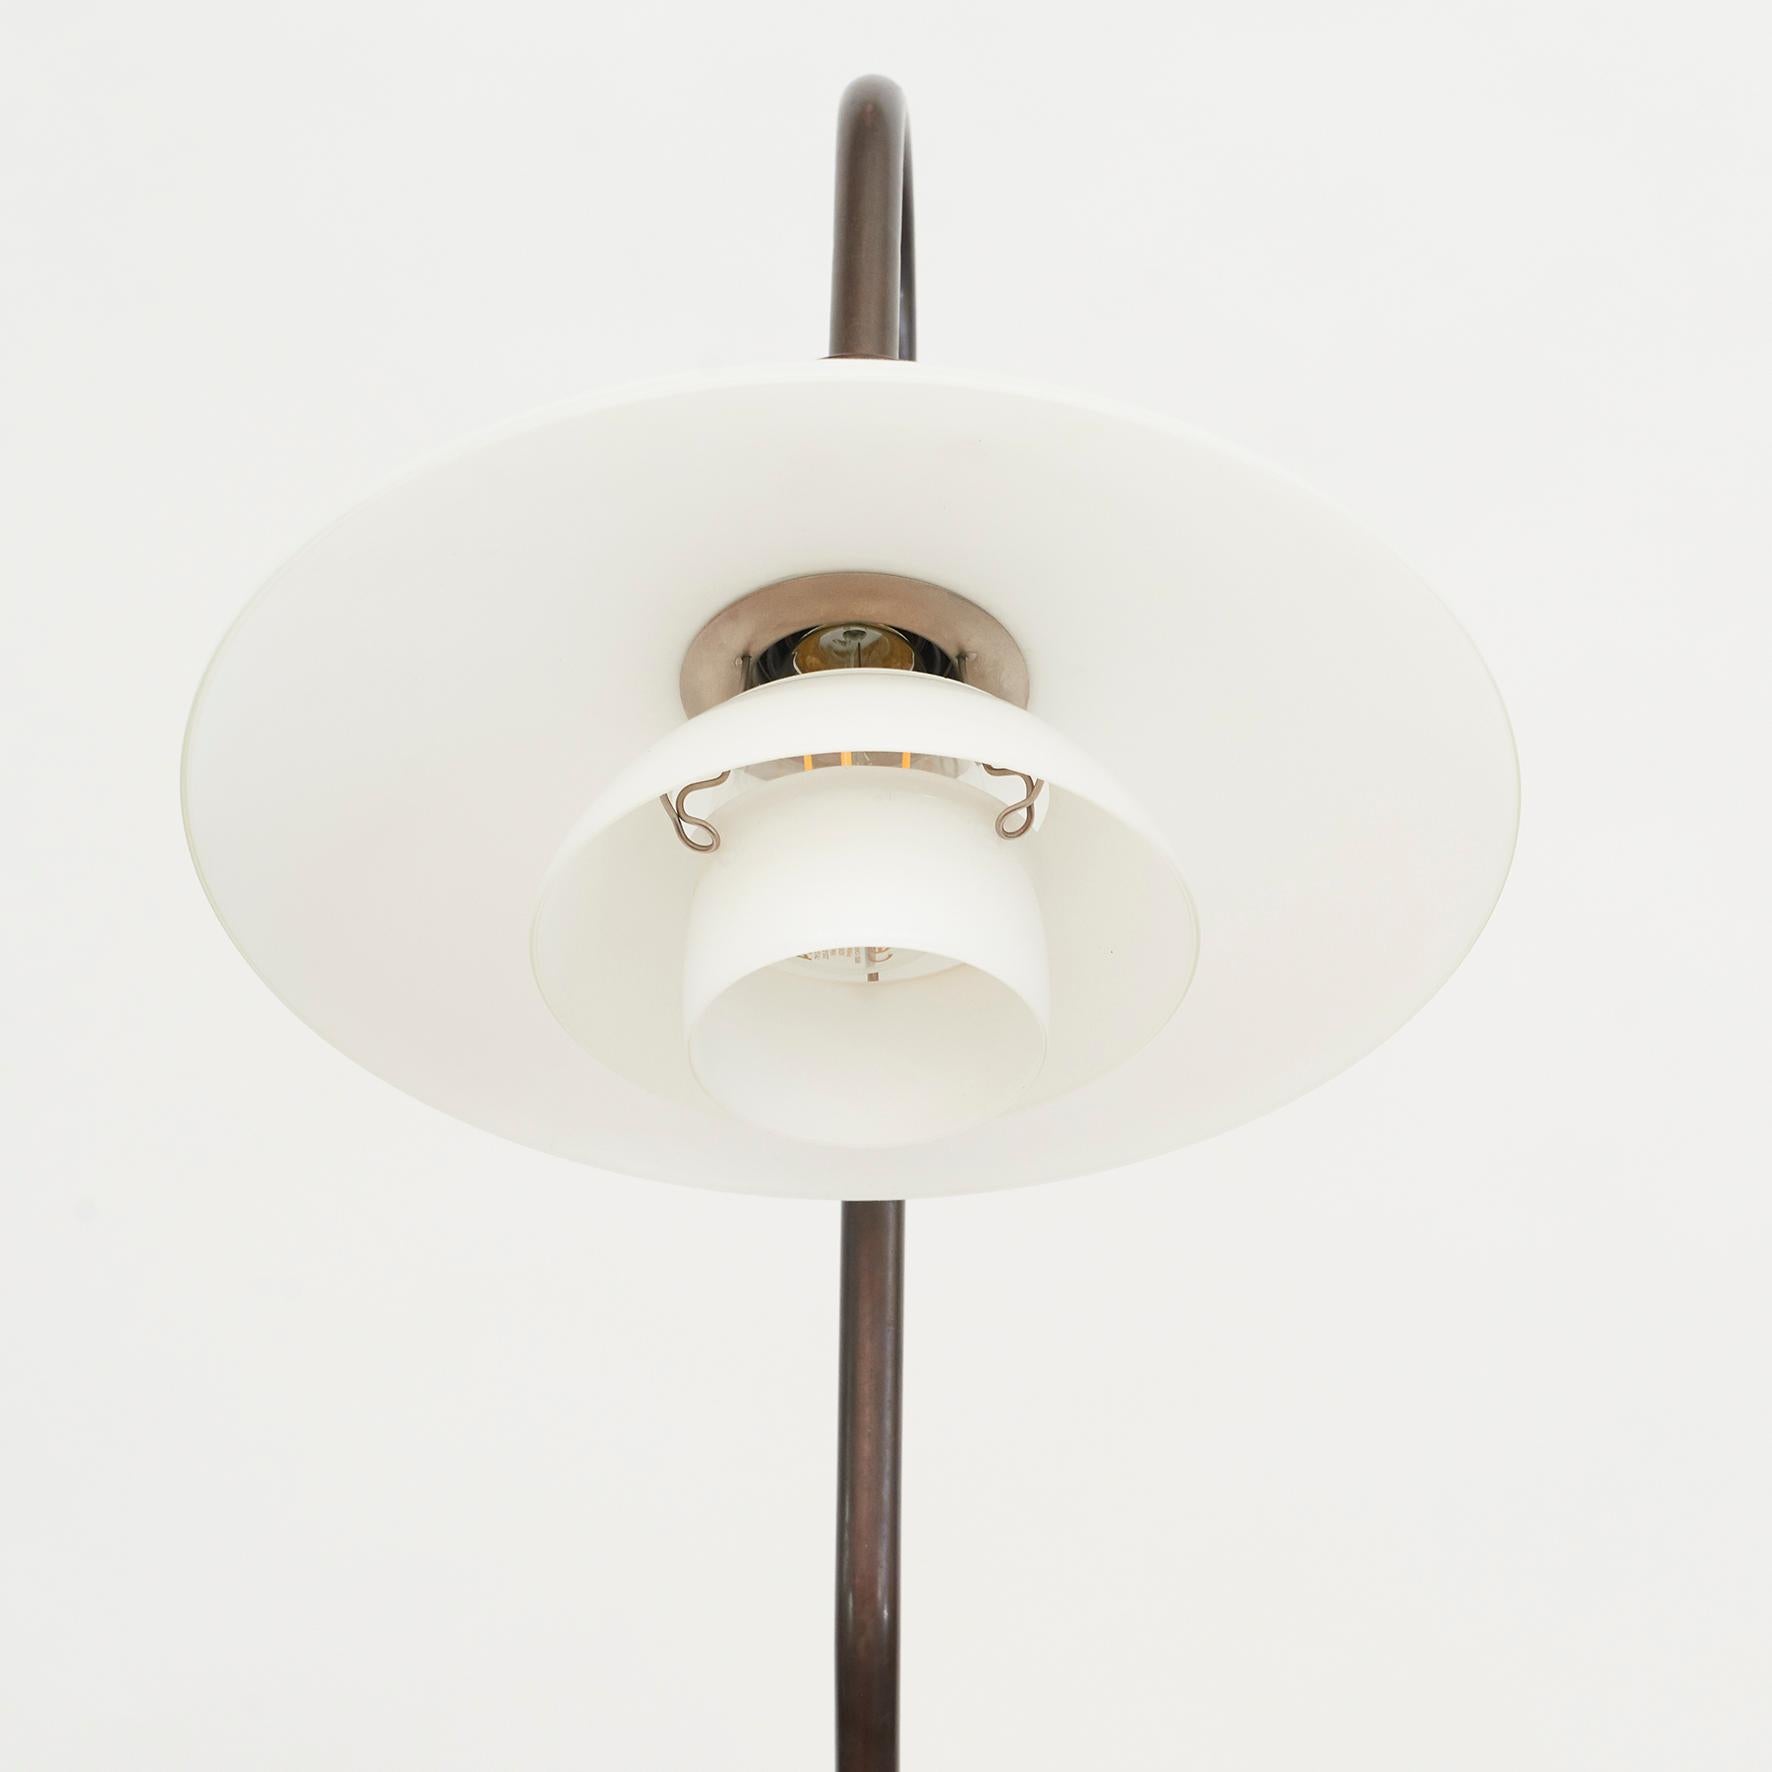 Lacquered Poul Henningsen 'Snowdrop' PH 3/2 Standard Floor Lamp, circa 1950